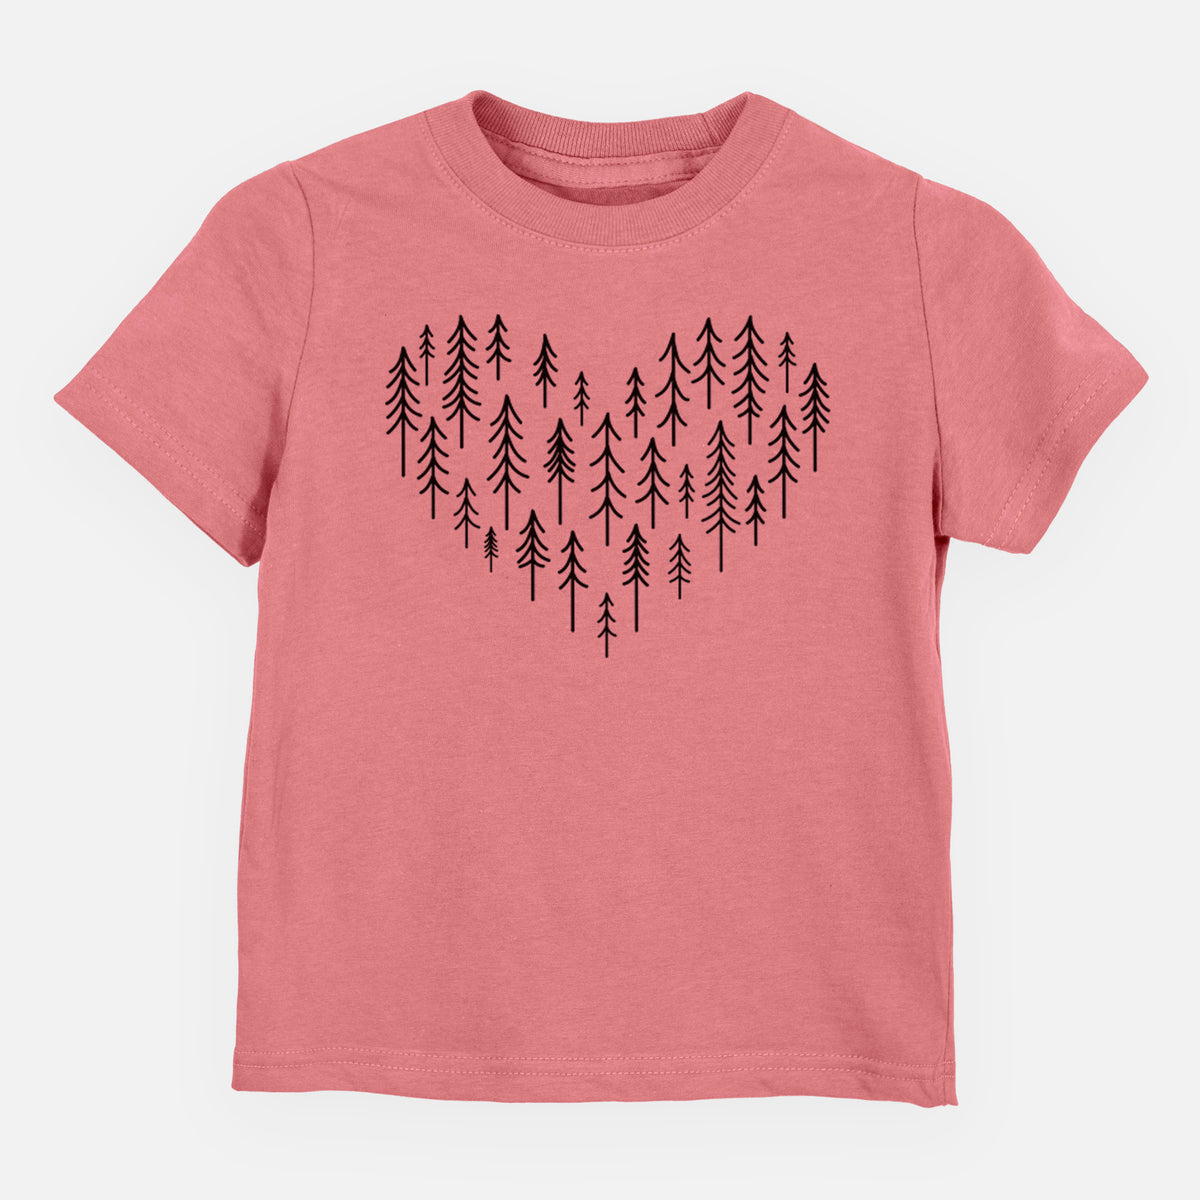 Heart of Trees - Kids Shirt